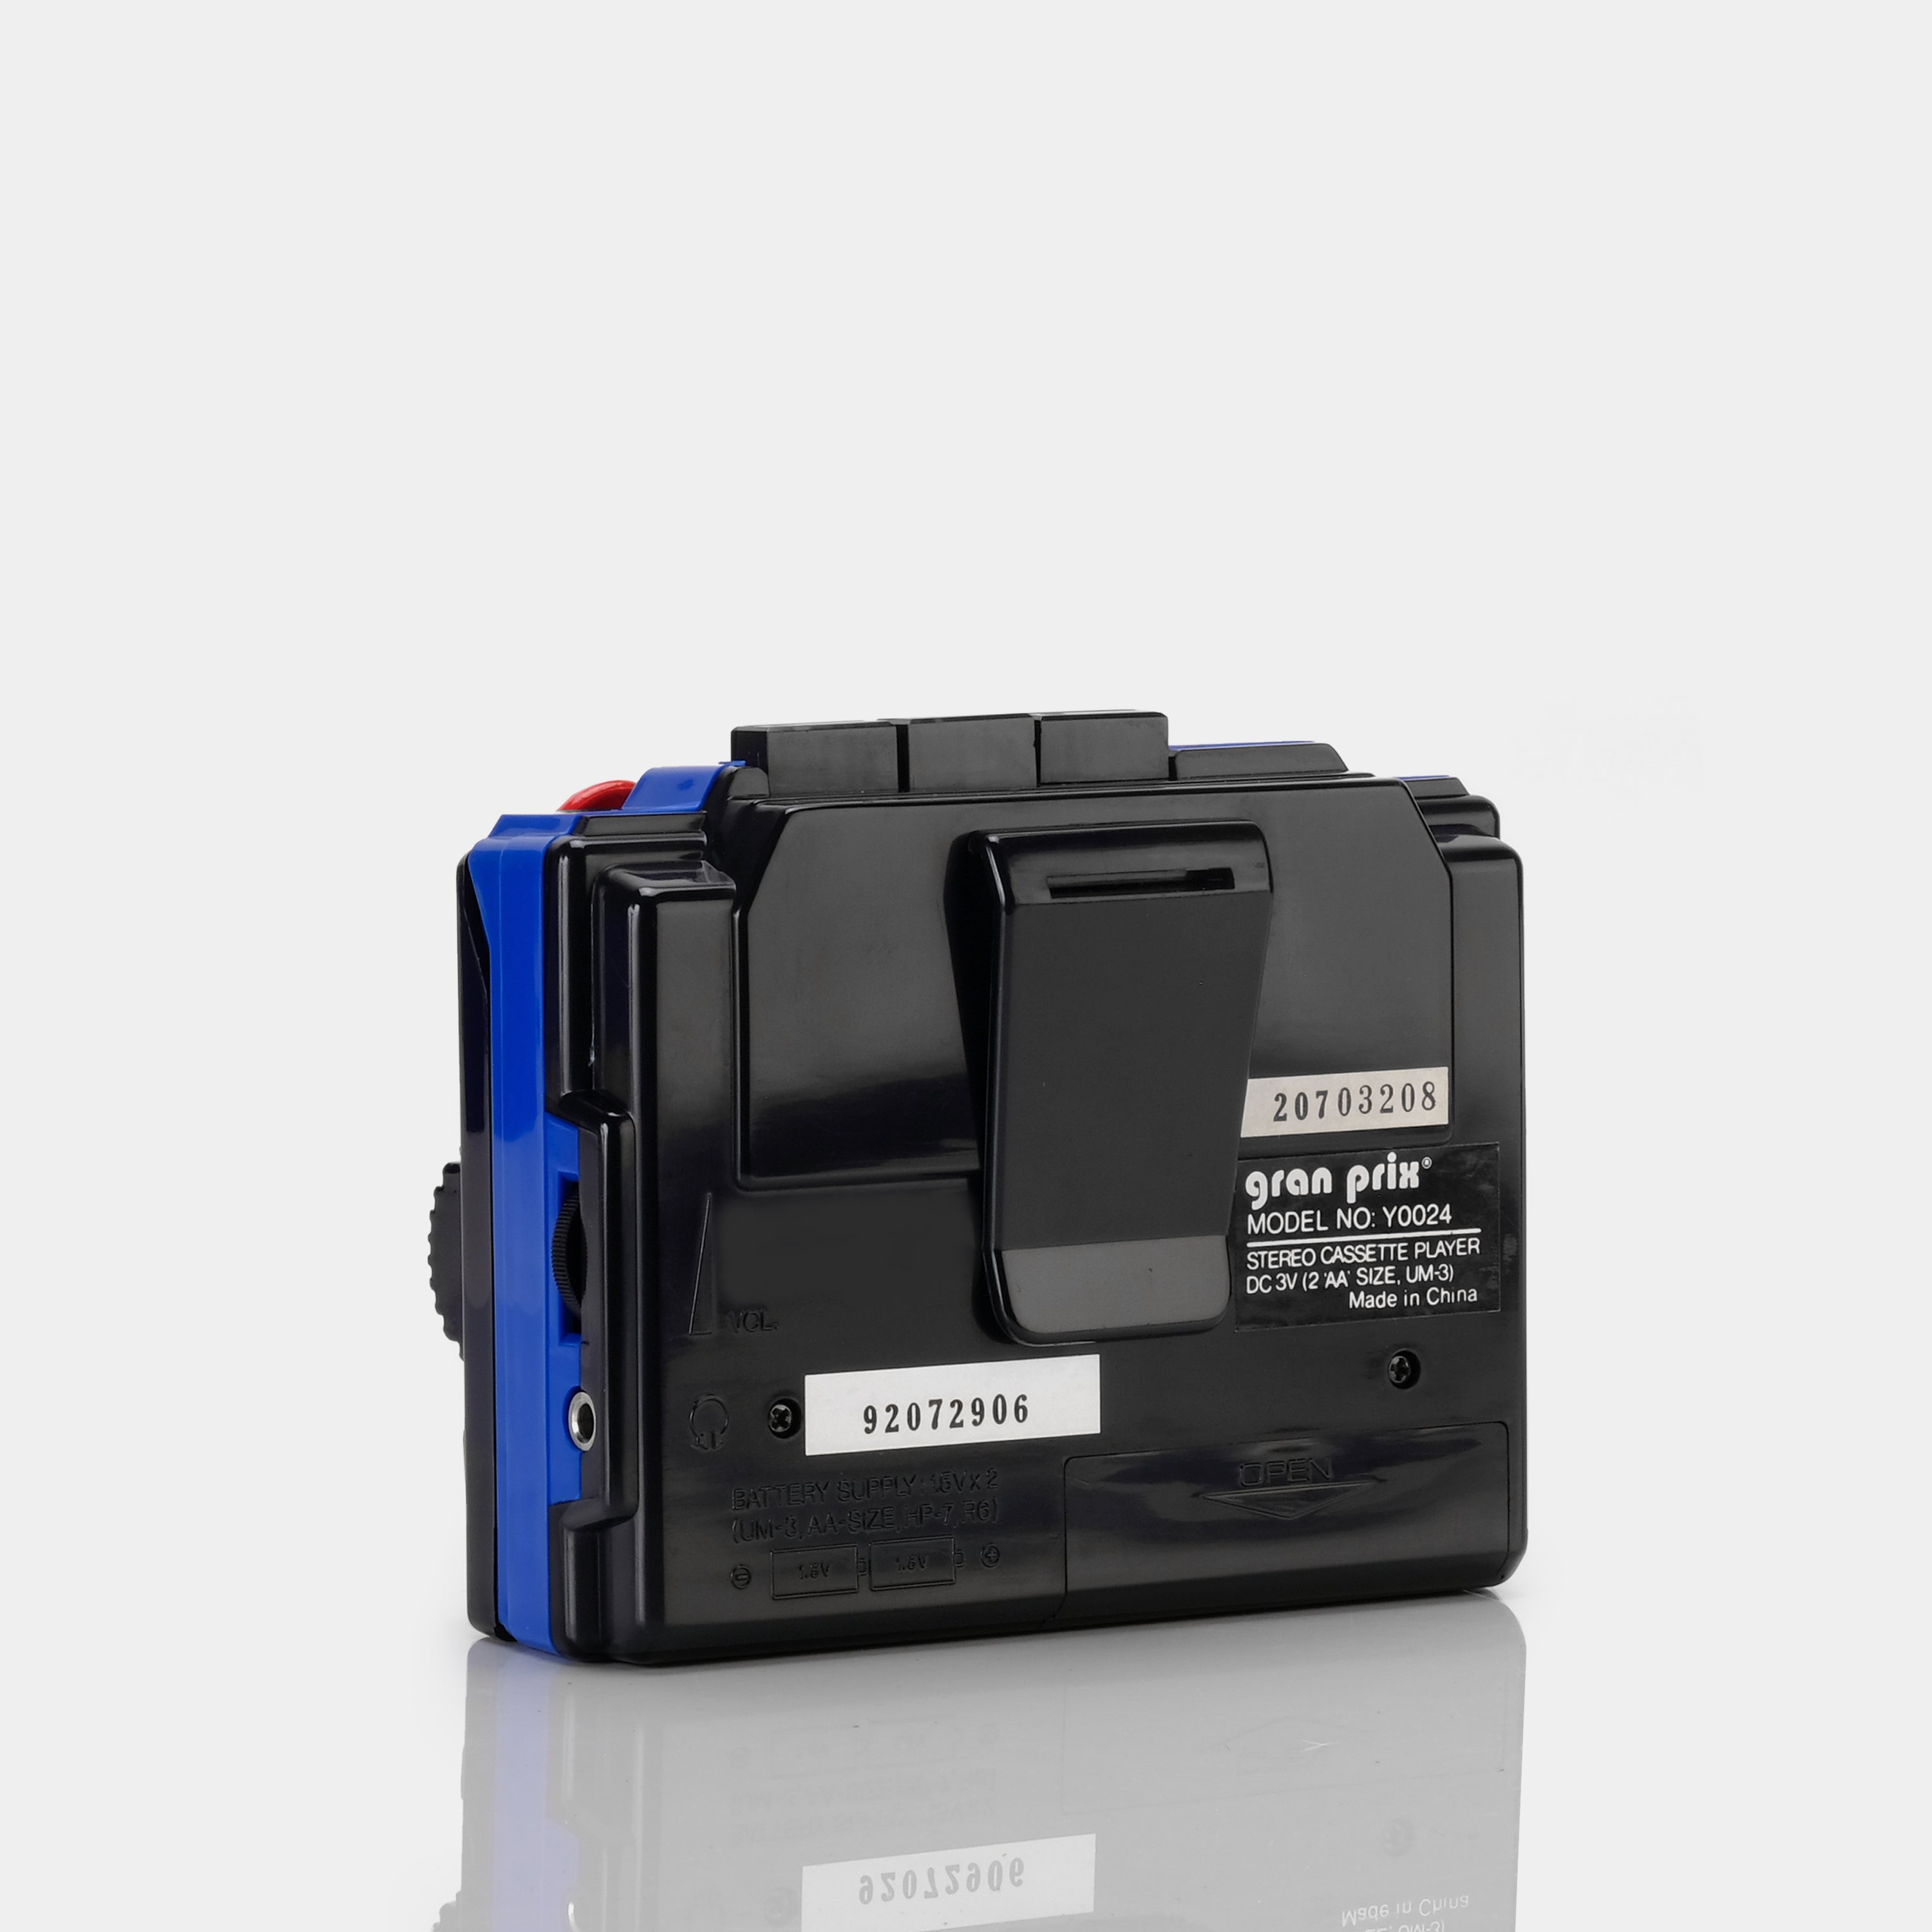 Gran Prix 4x4 Y0024 Personal Stereo Portable Cassette Player